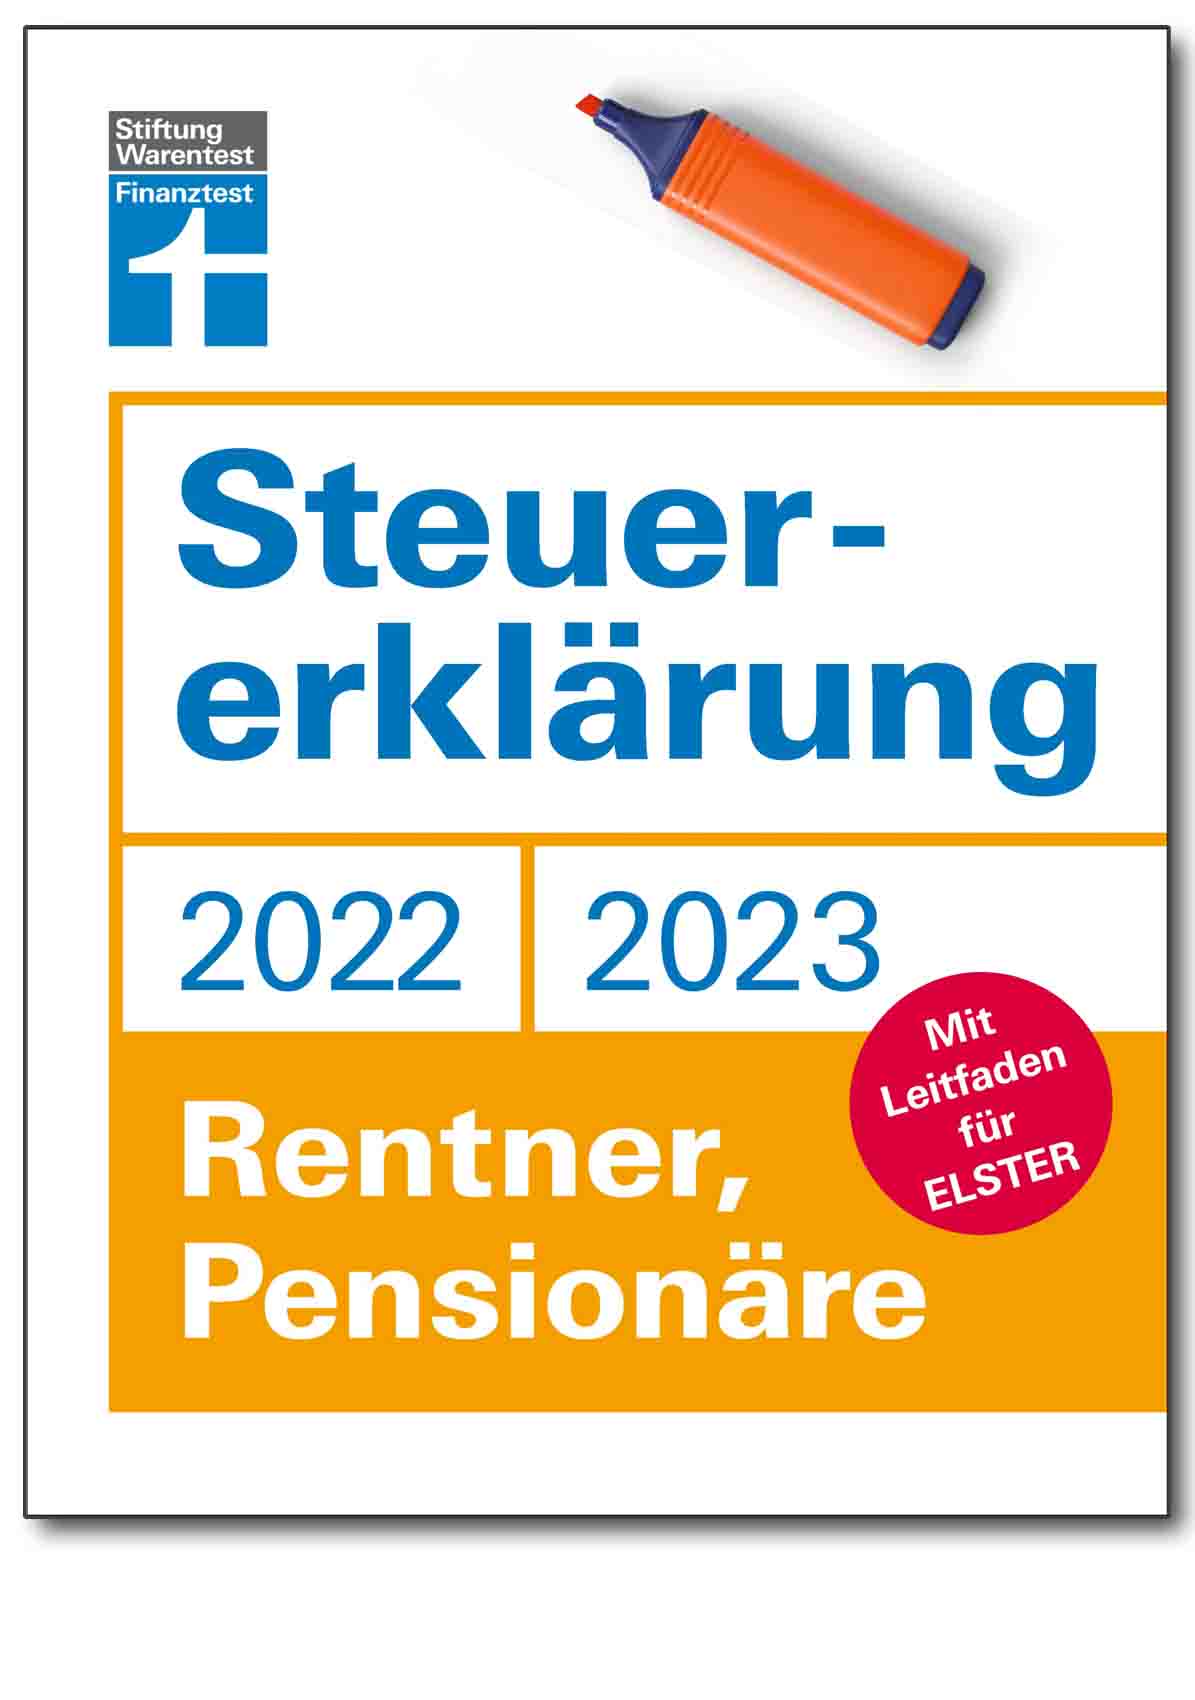 Buch - Steuererklärung 2022/2023 Rentner, Pensionäre - Shop Verbraucherzentrale